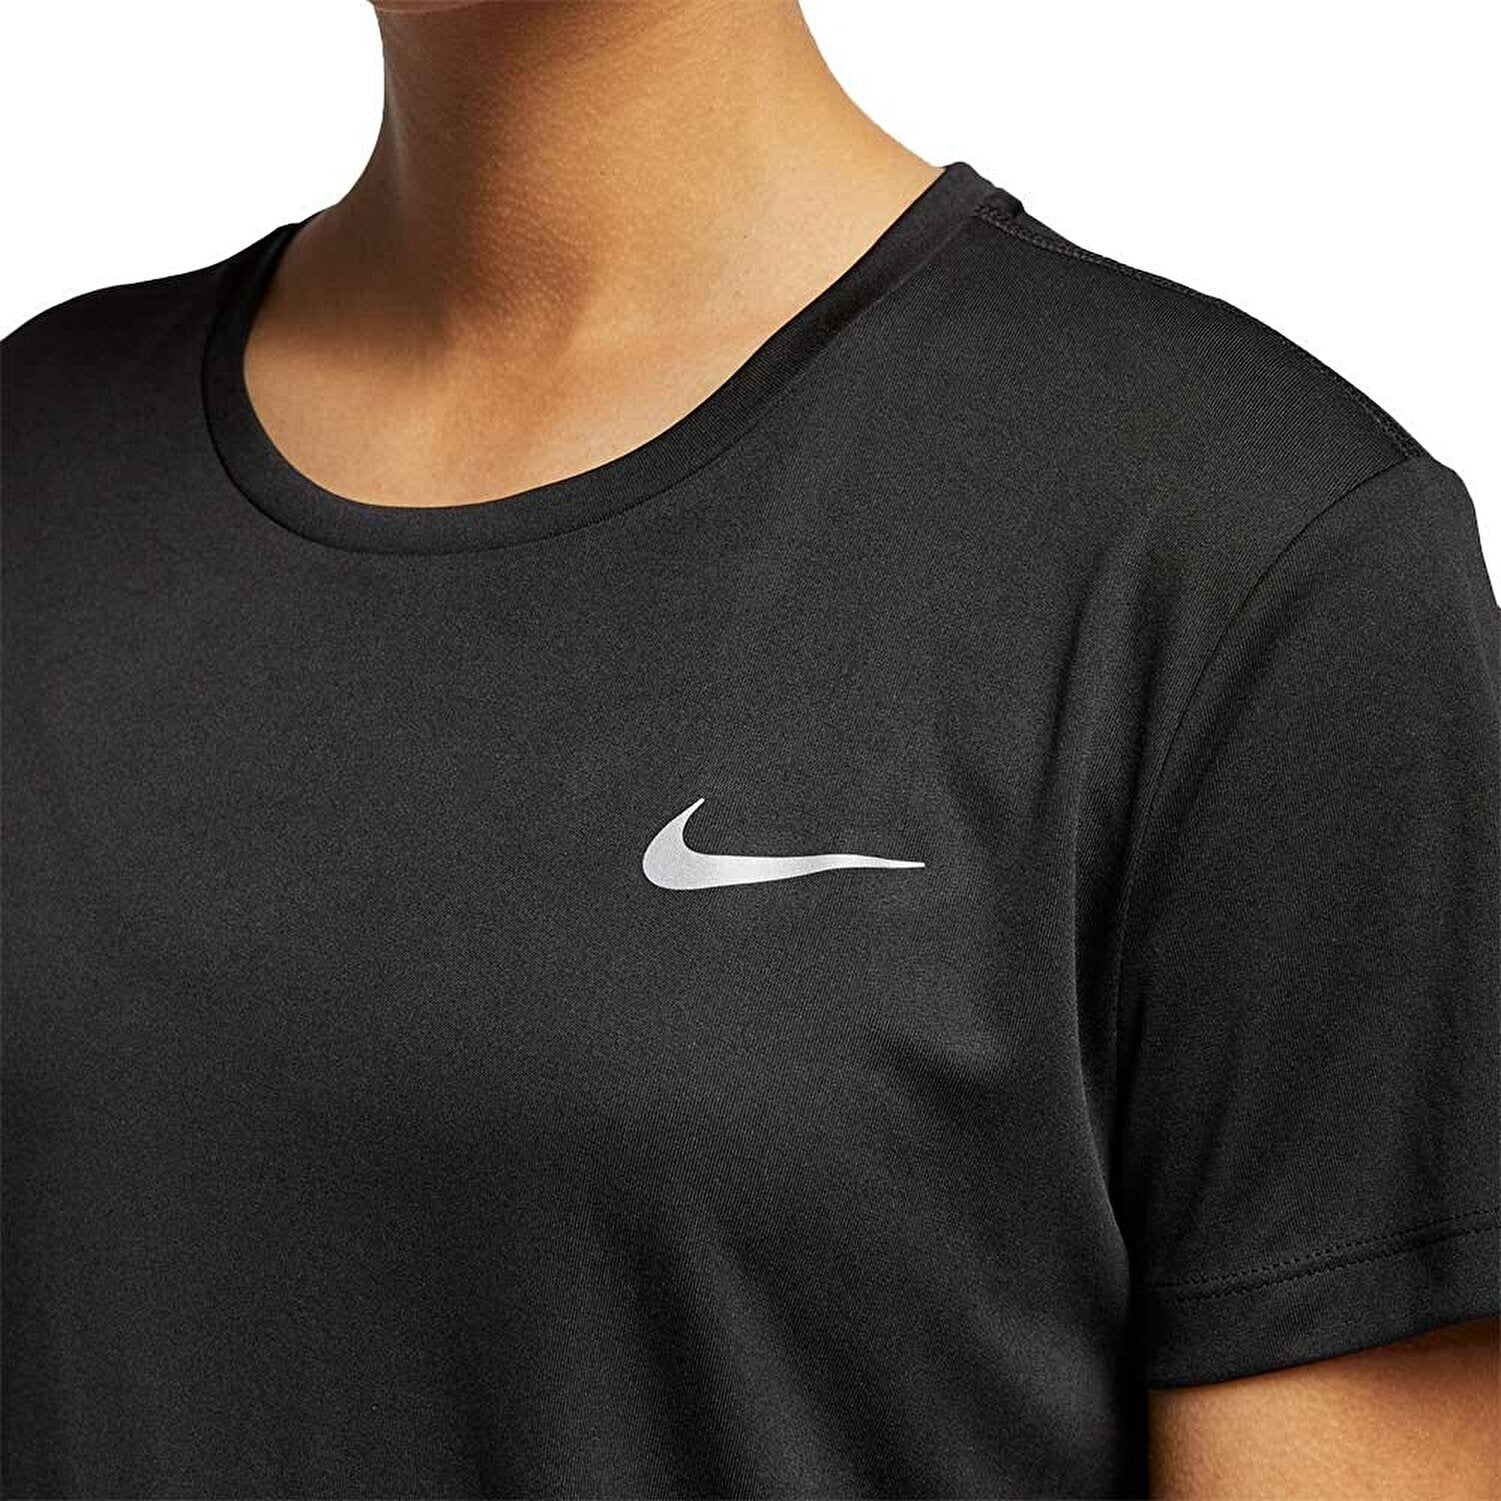 Nike Miller short sleeve T-shirt women